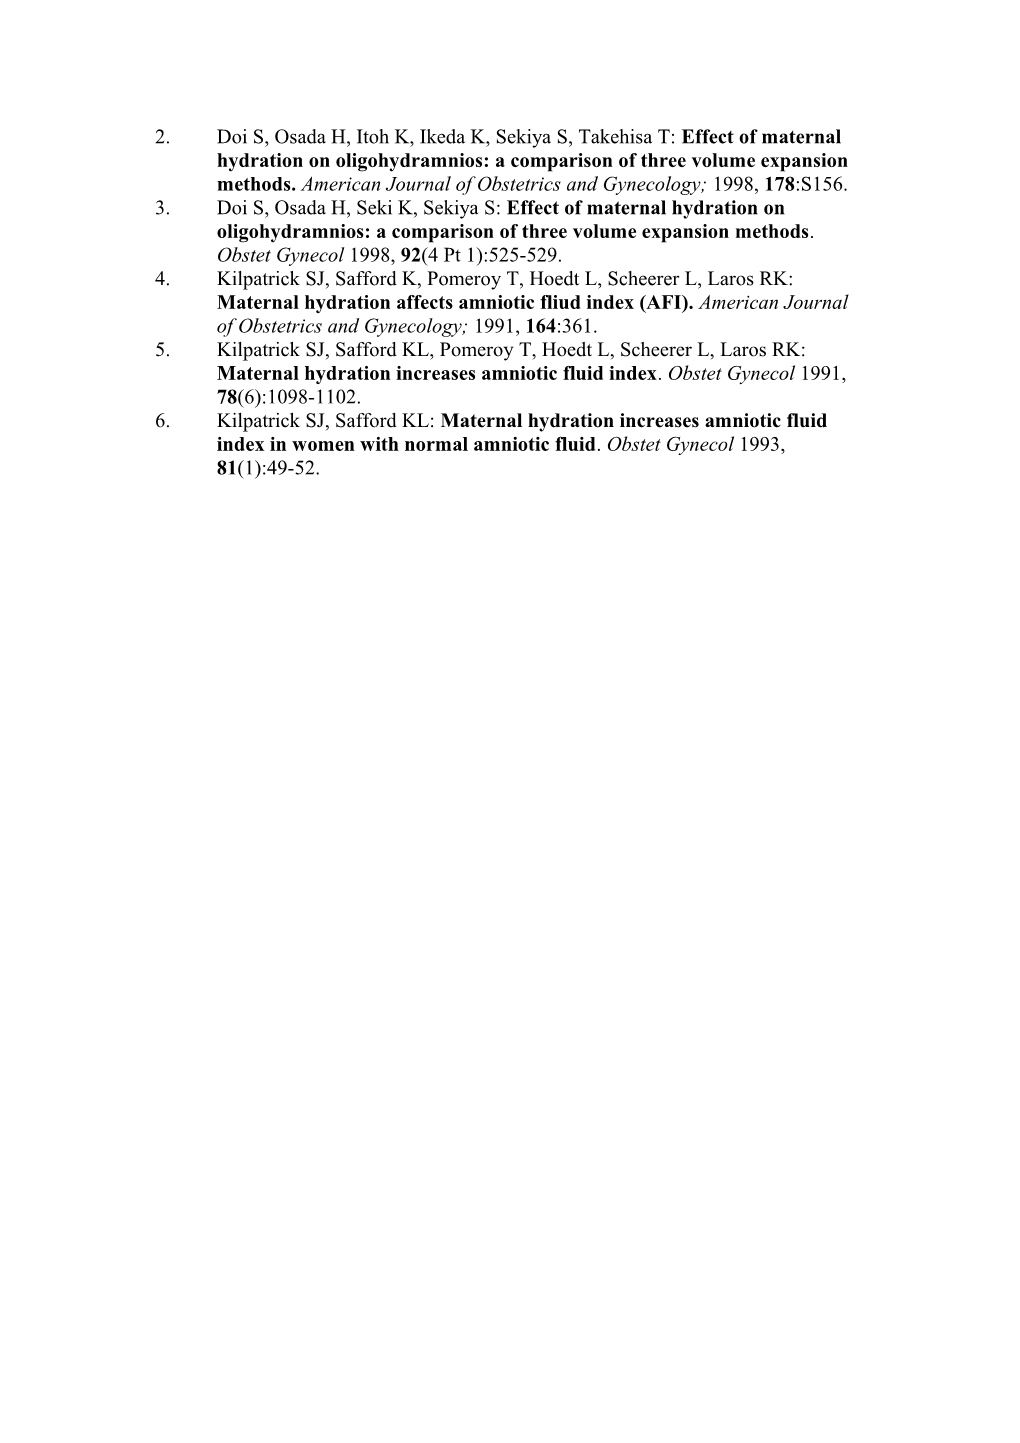 Web Table 16. Component Studies in Hofmeyr and Gulmezoglu 2002 Meta-Analysis 1 : Impact